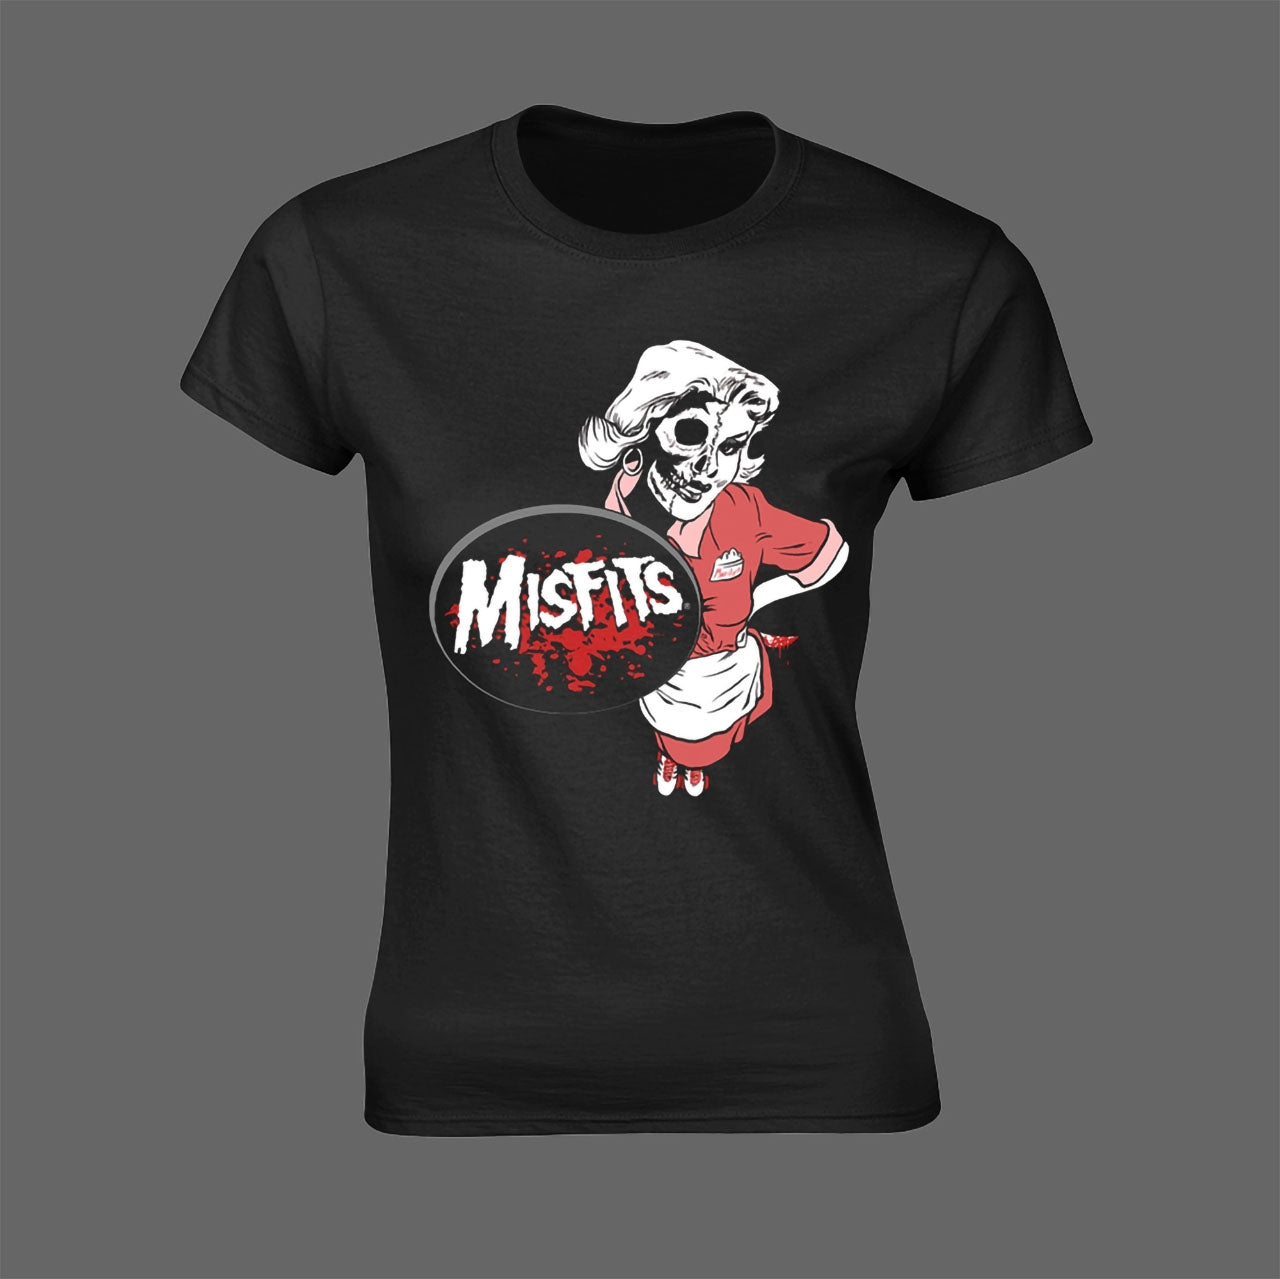 Misfits - Waitress (Women's T-Shirt)